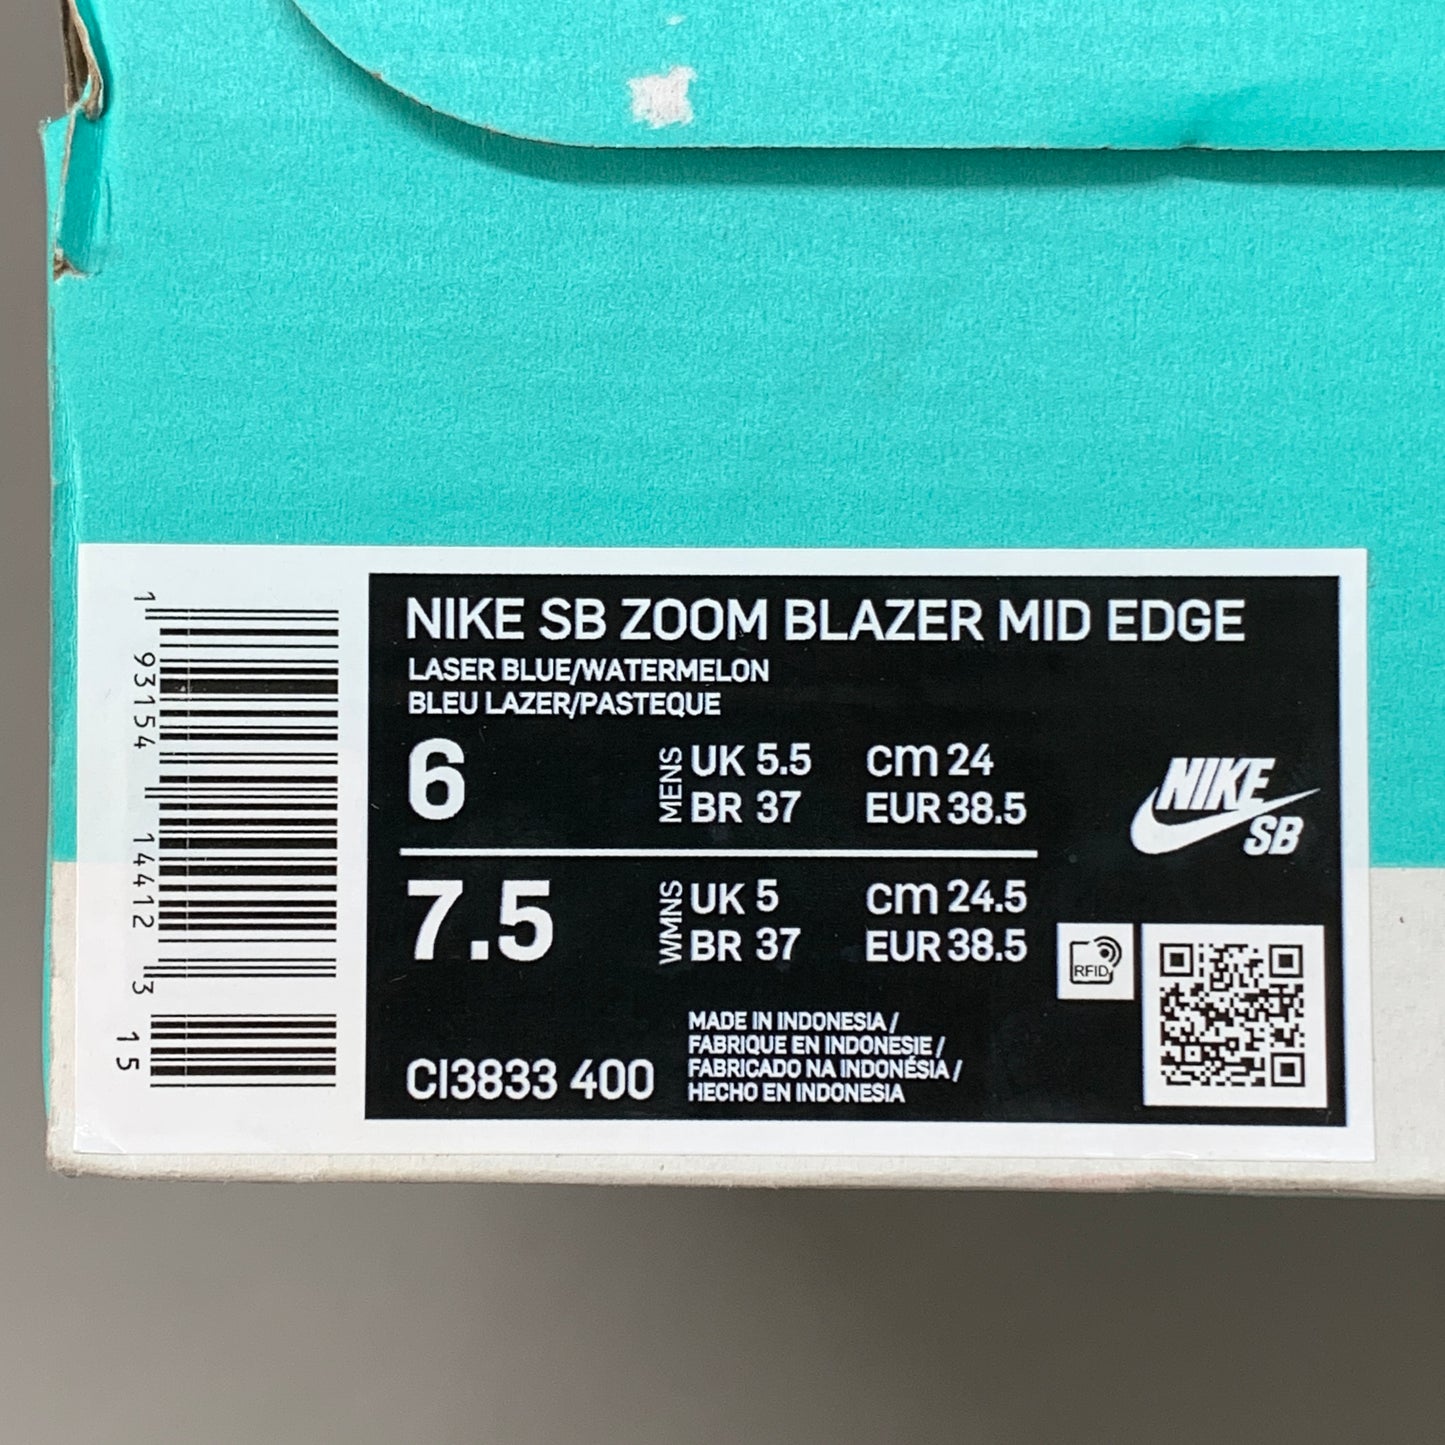 NIKE SB Zoom Blazer Mid Edge Sneakers Women's Sz 7.5 Blue/Watermelon CI3833 400 (New Other)